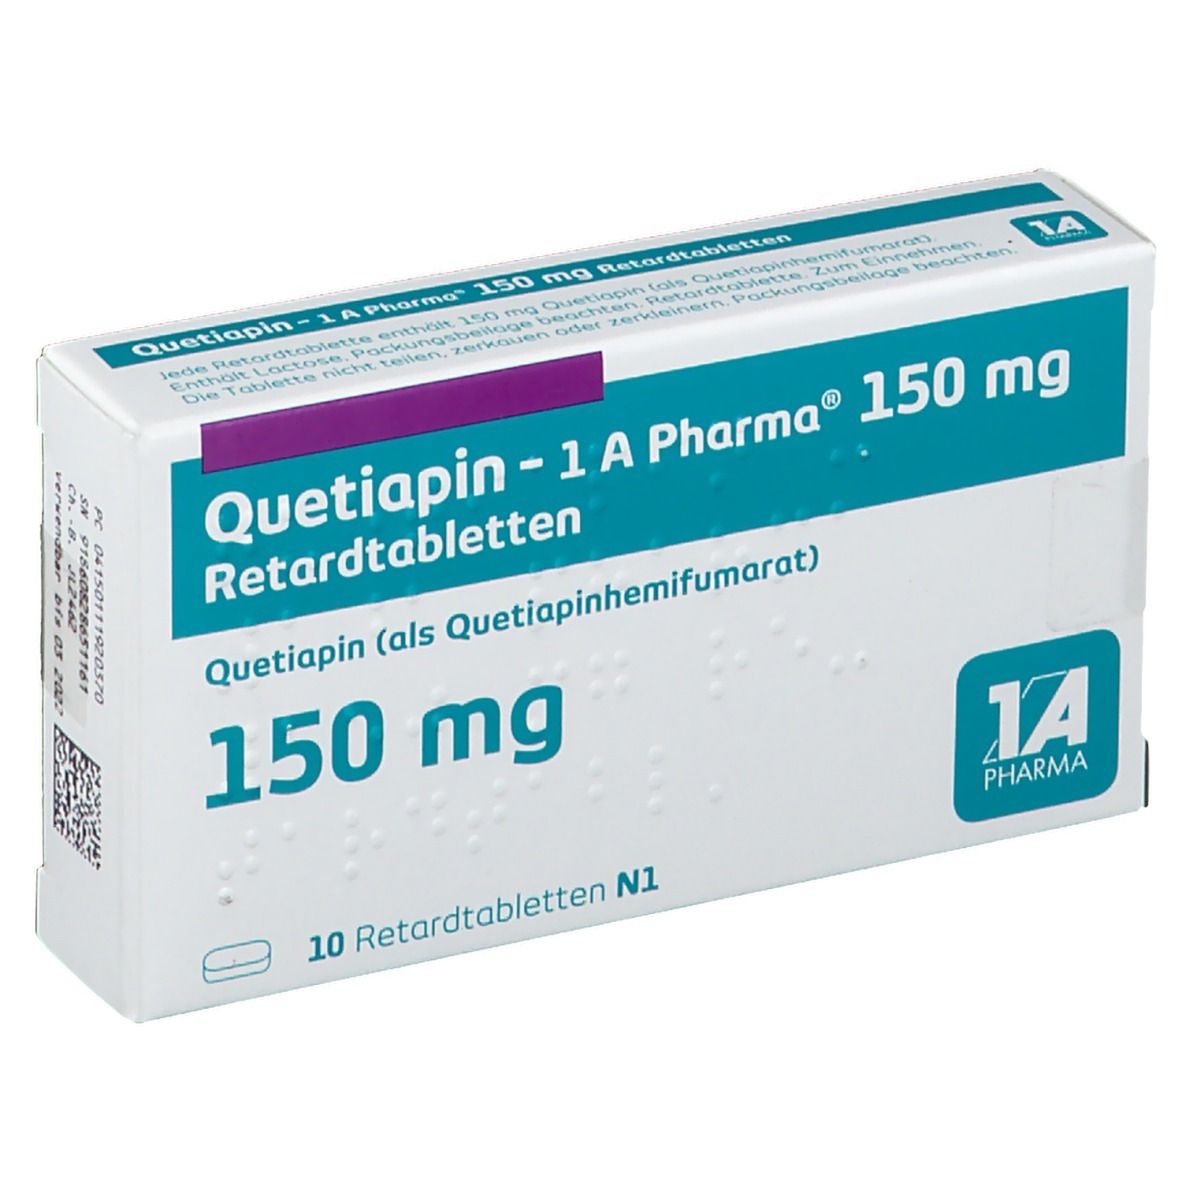 Quetiapin - 1 A Pharma® 150 mg